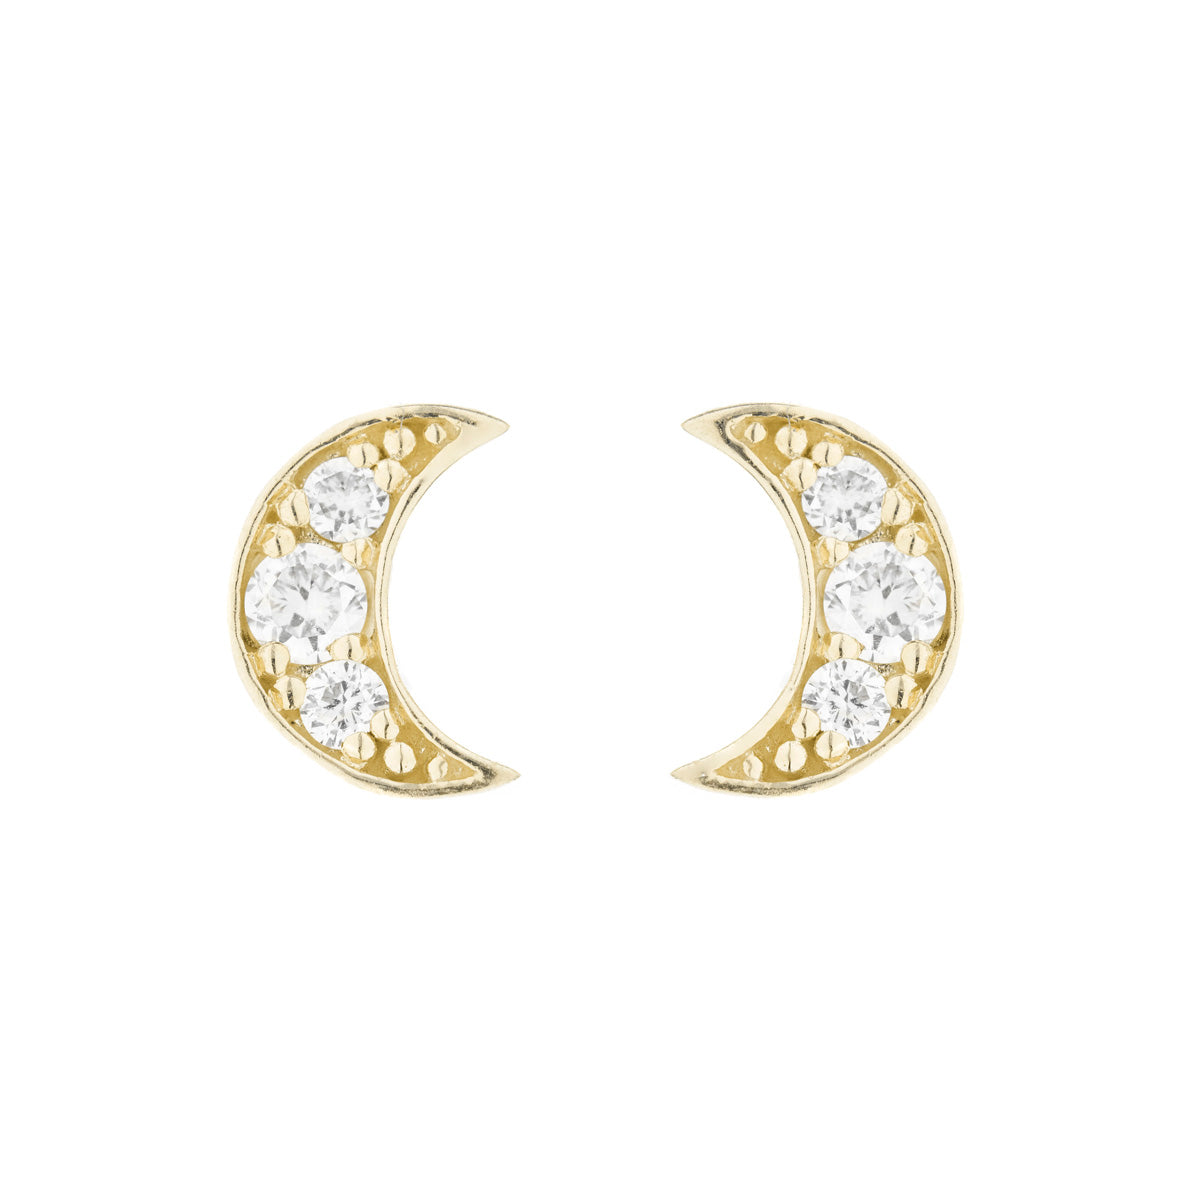 Moon earrings 18k sterling gold and diamonds